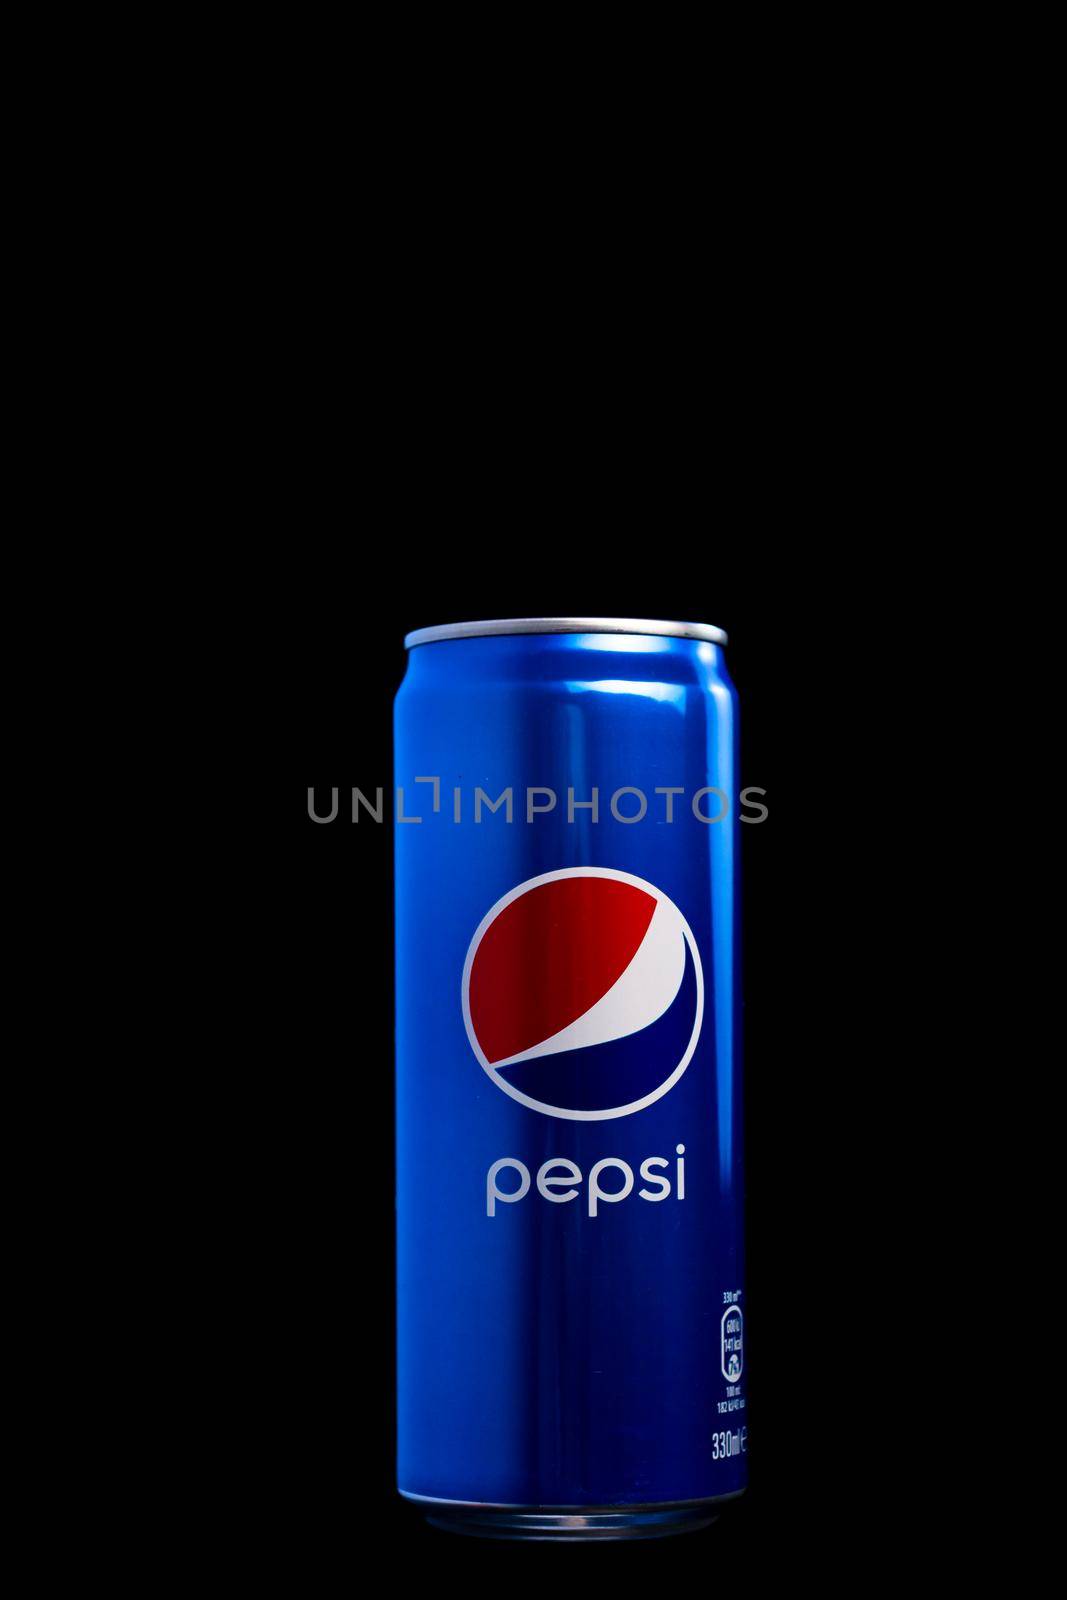 Editorial photo of classic Pepsi can on black background. Studio shot in Bucharest, Romania, 2021 by vladispas